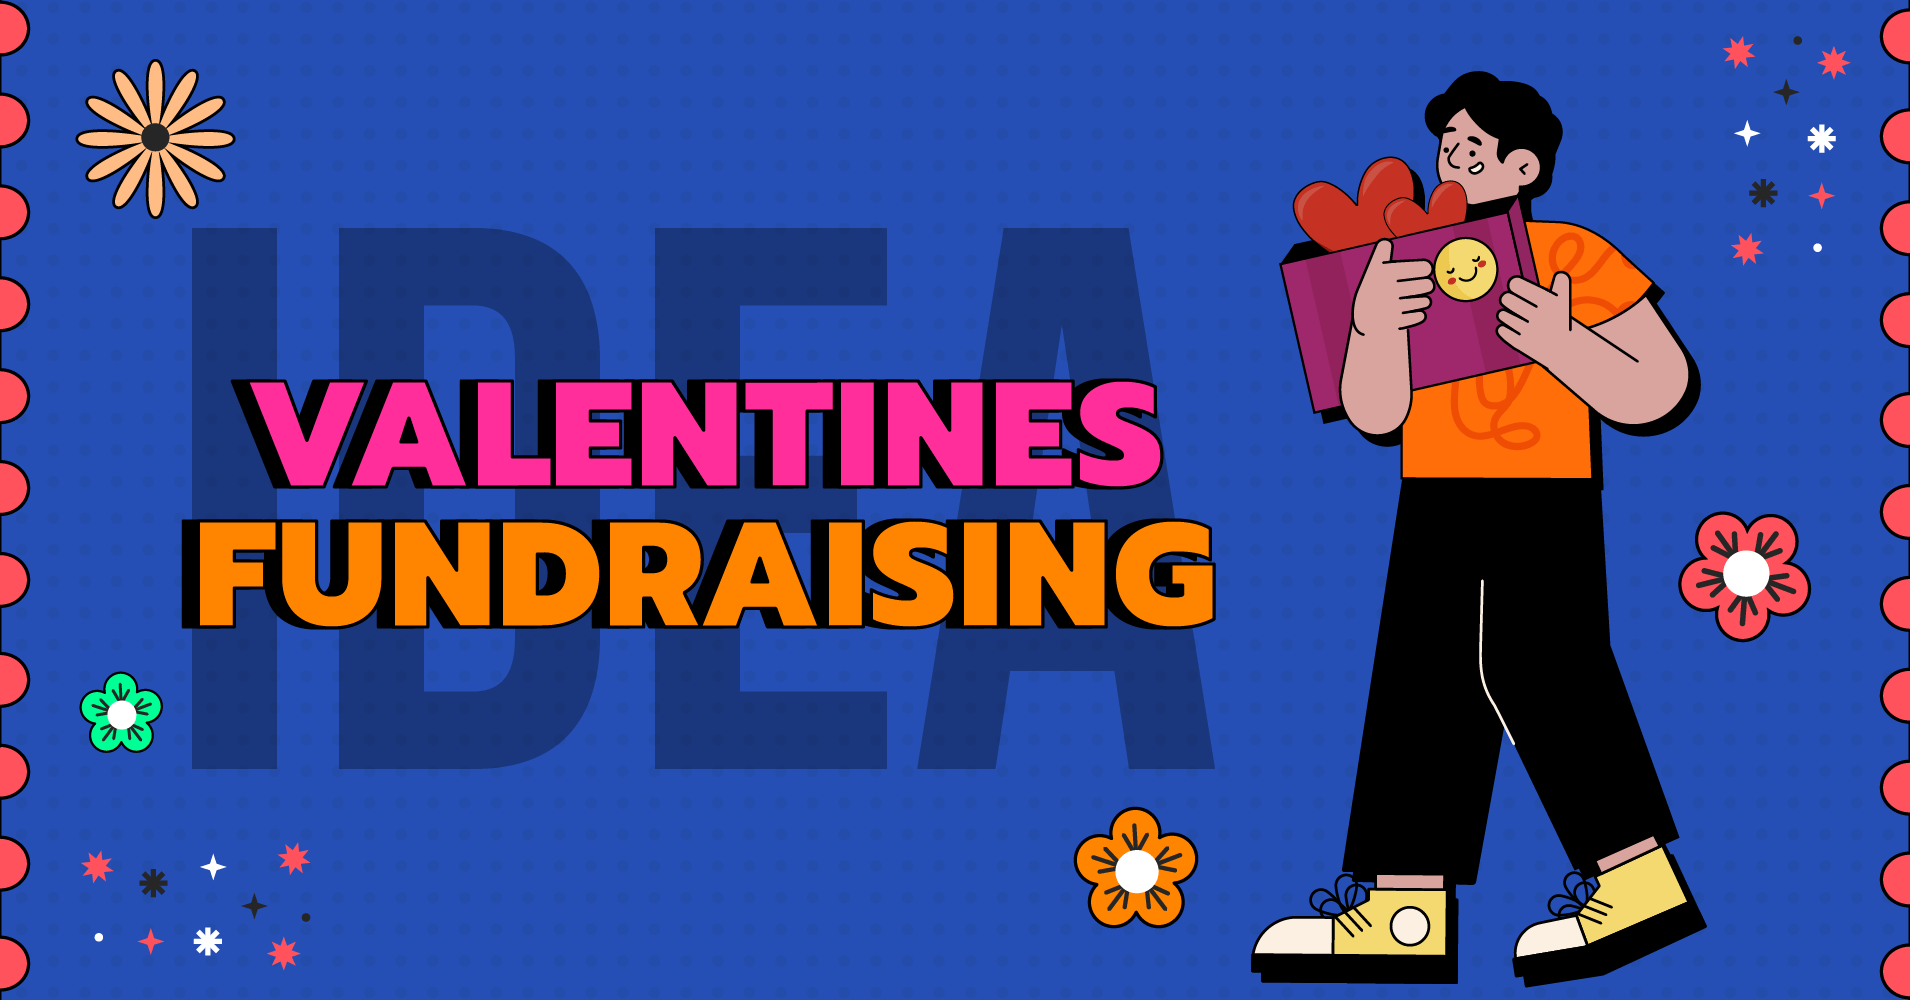 valentines fundraising ideas for non profits